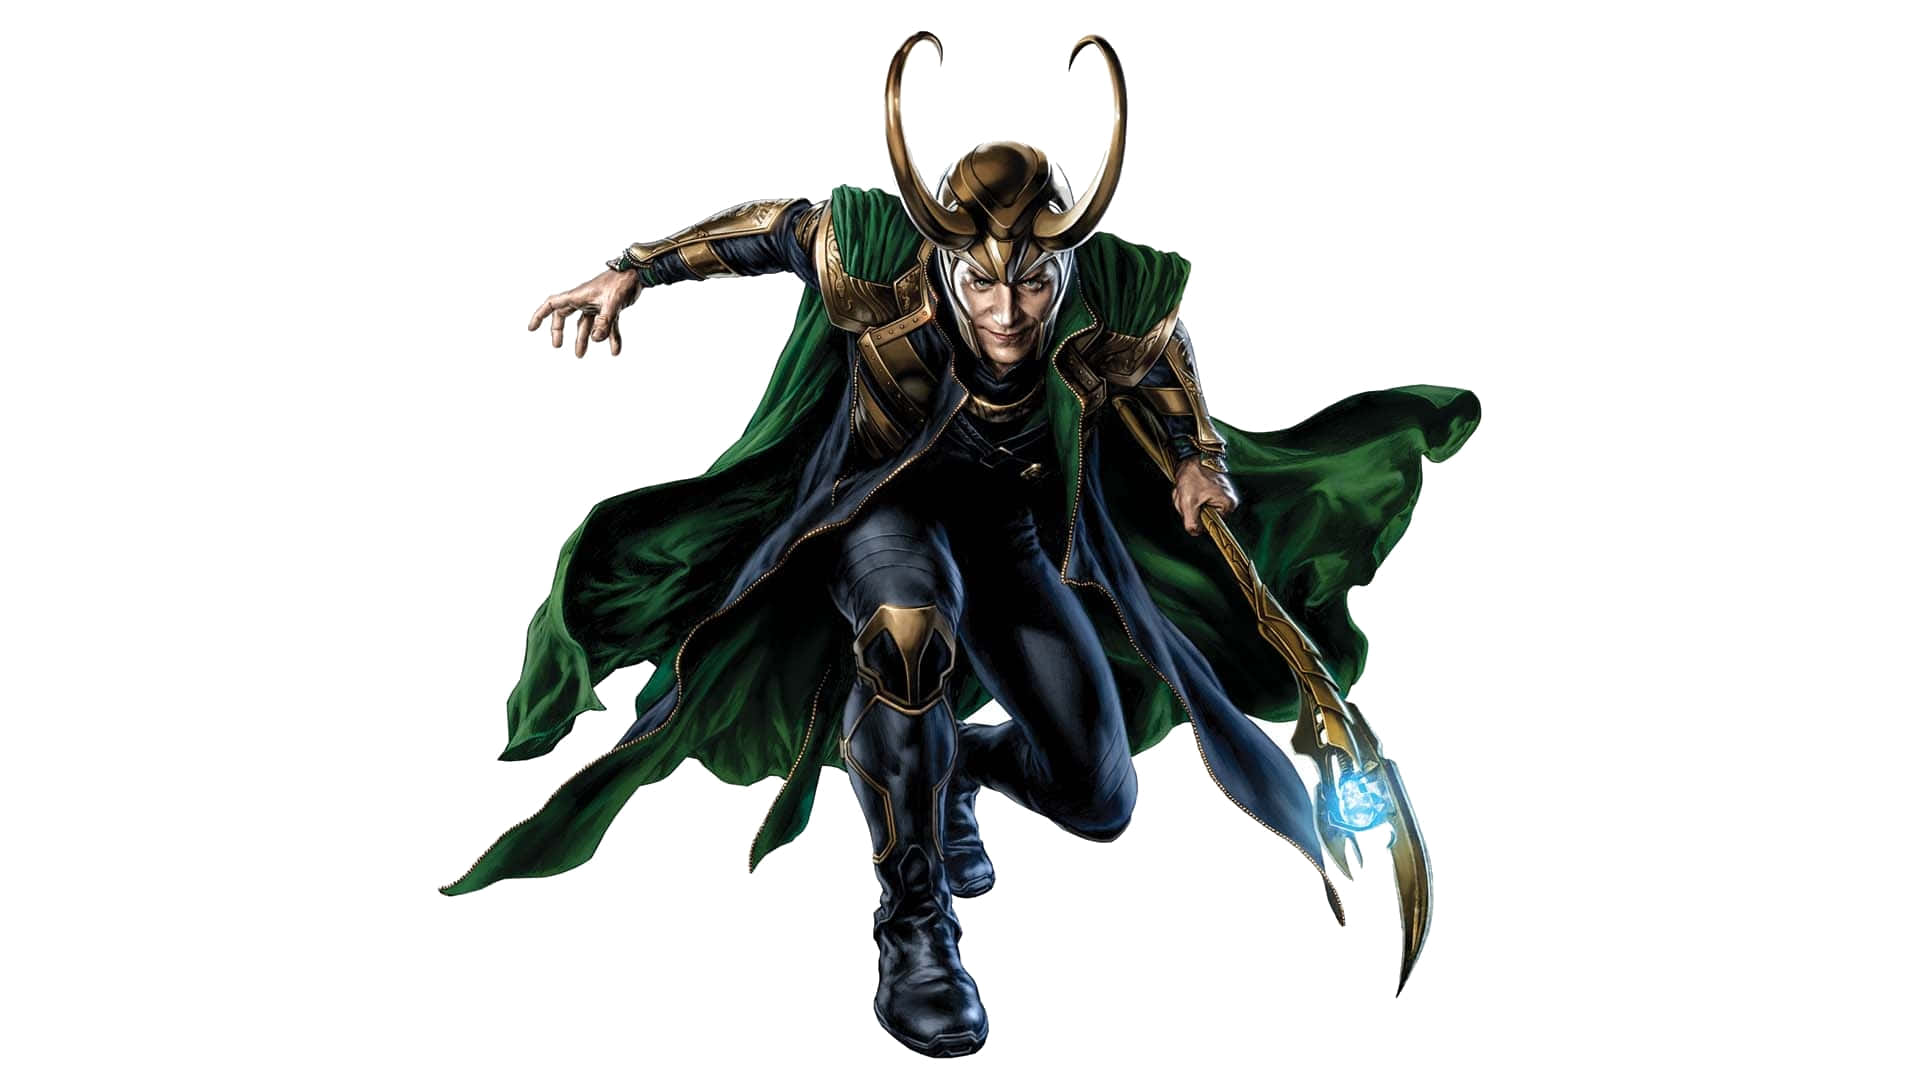 "The God of Mischief, Loki"